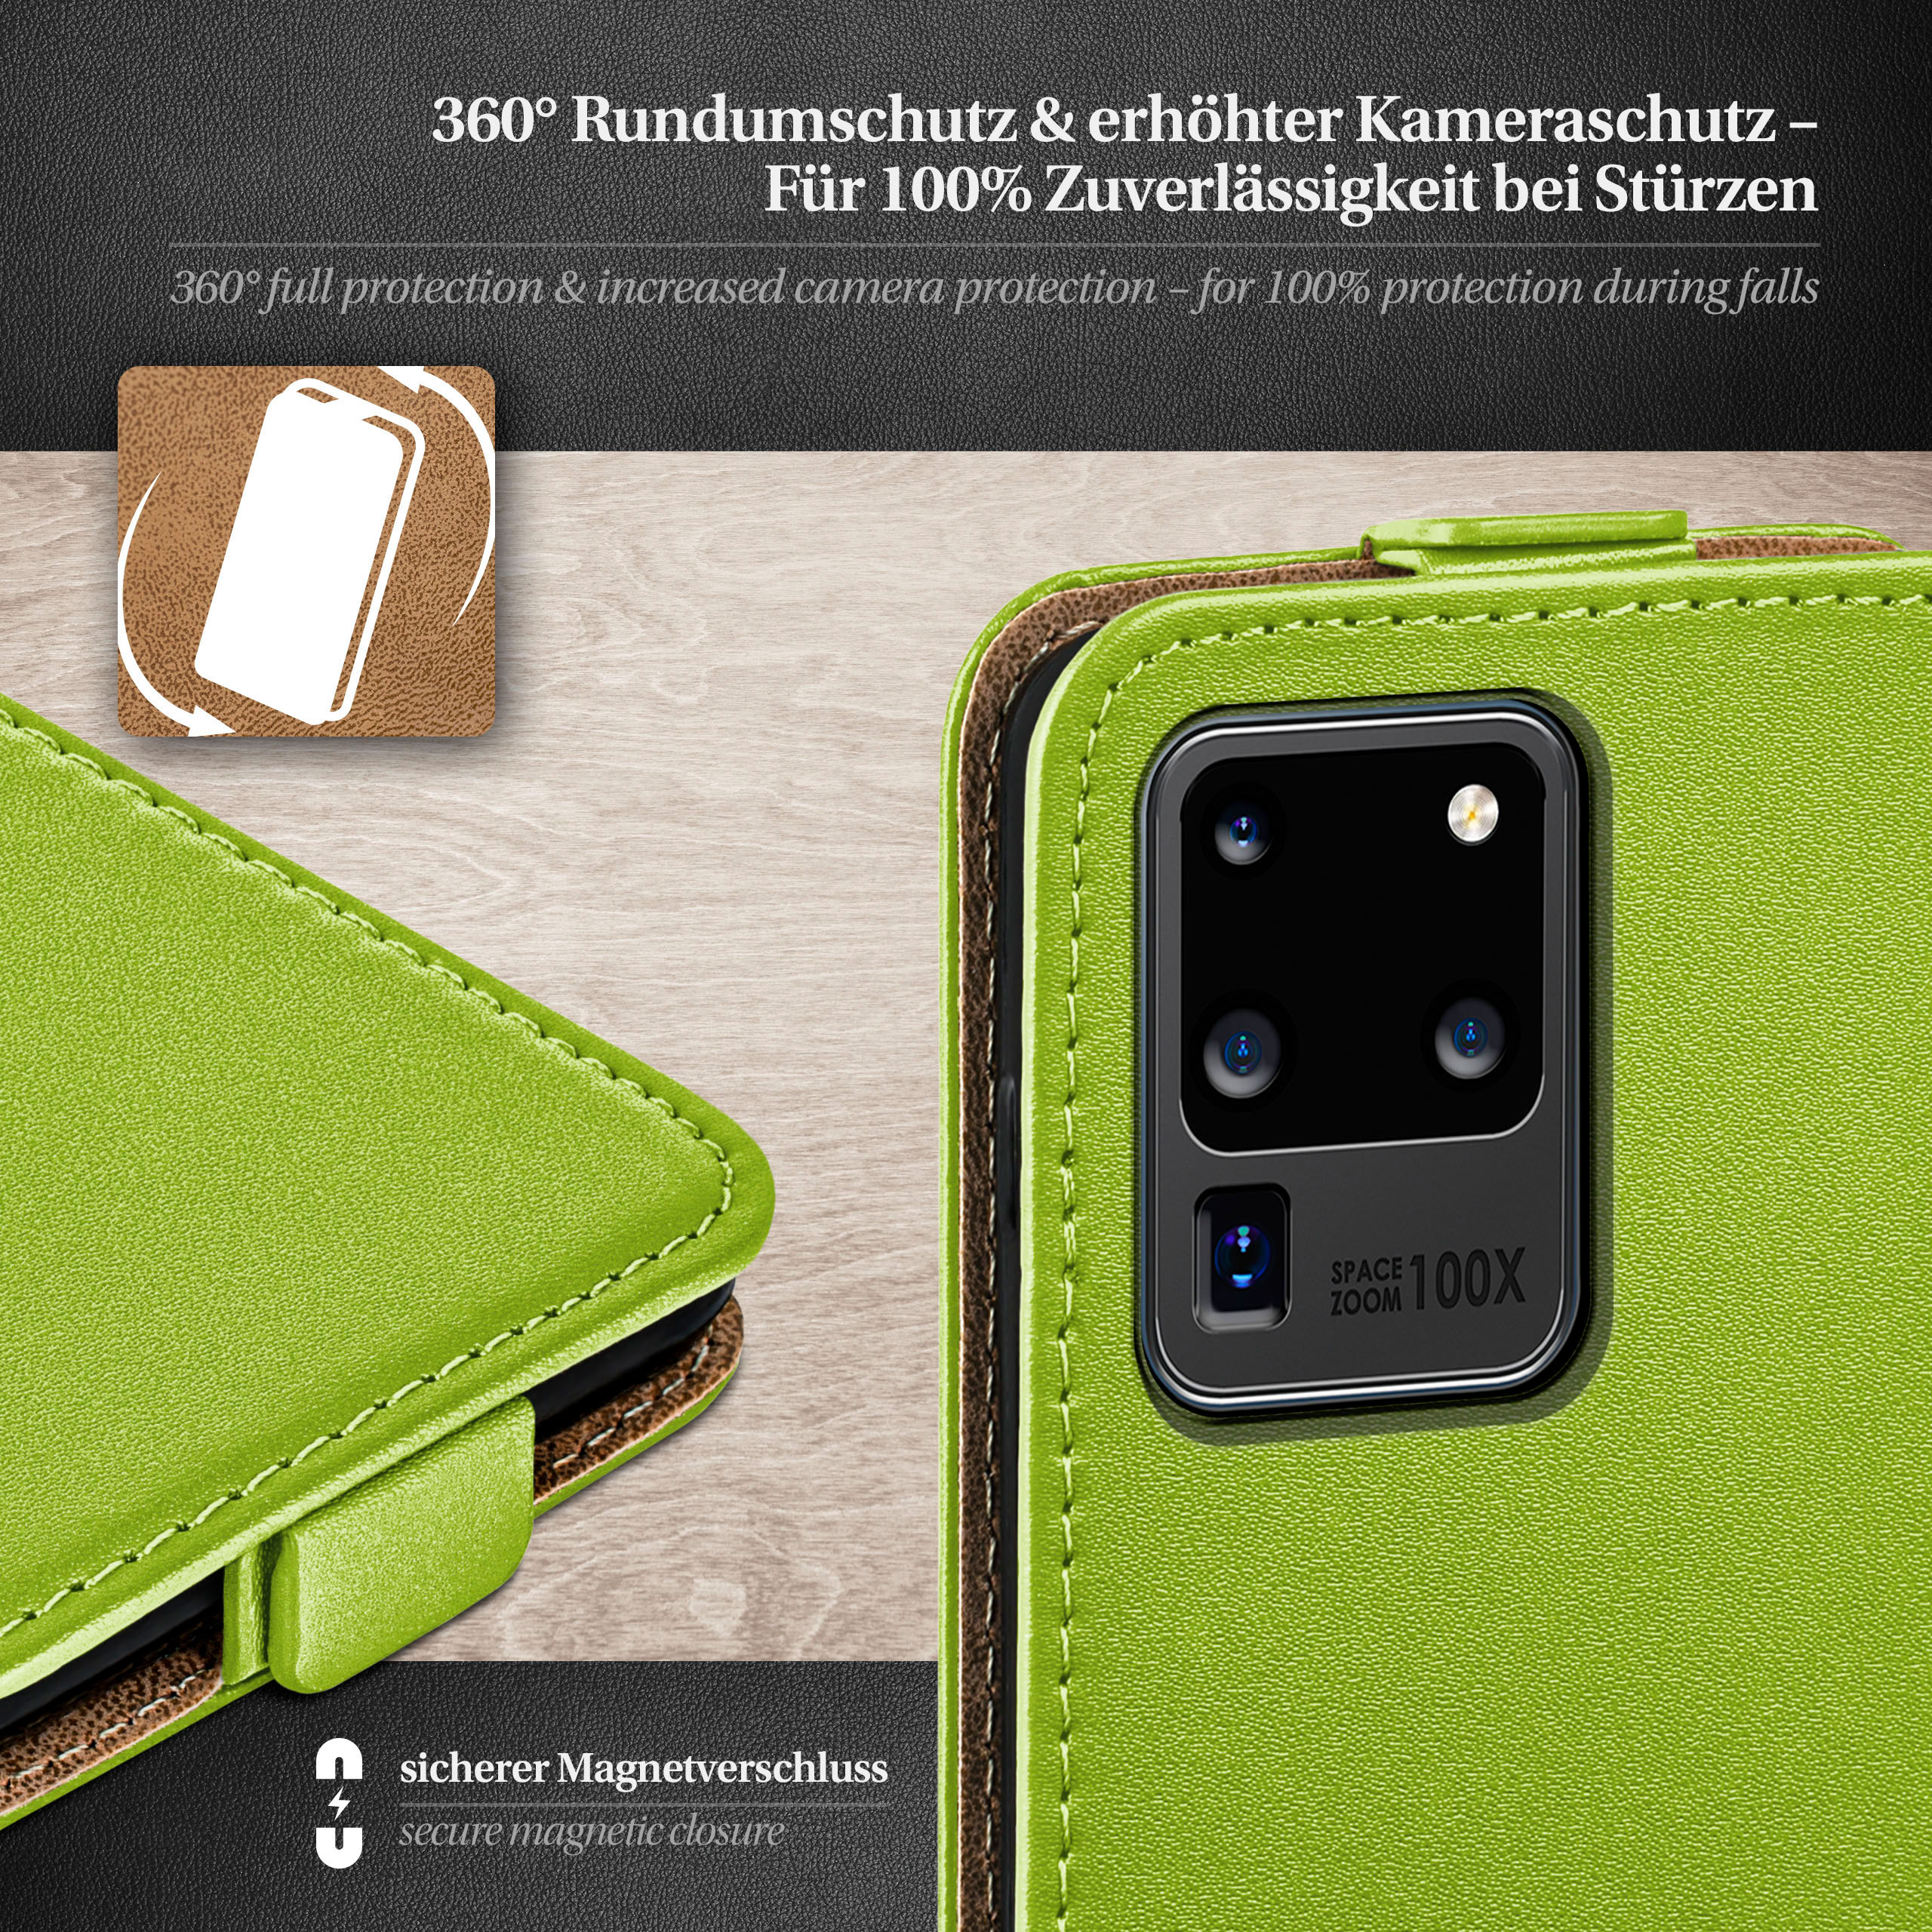 Cover, Galaxy 5G, S20 Flip Ultra Lime-Green MOEX Case, / Flip Samsung,